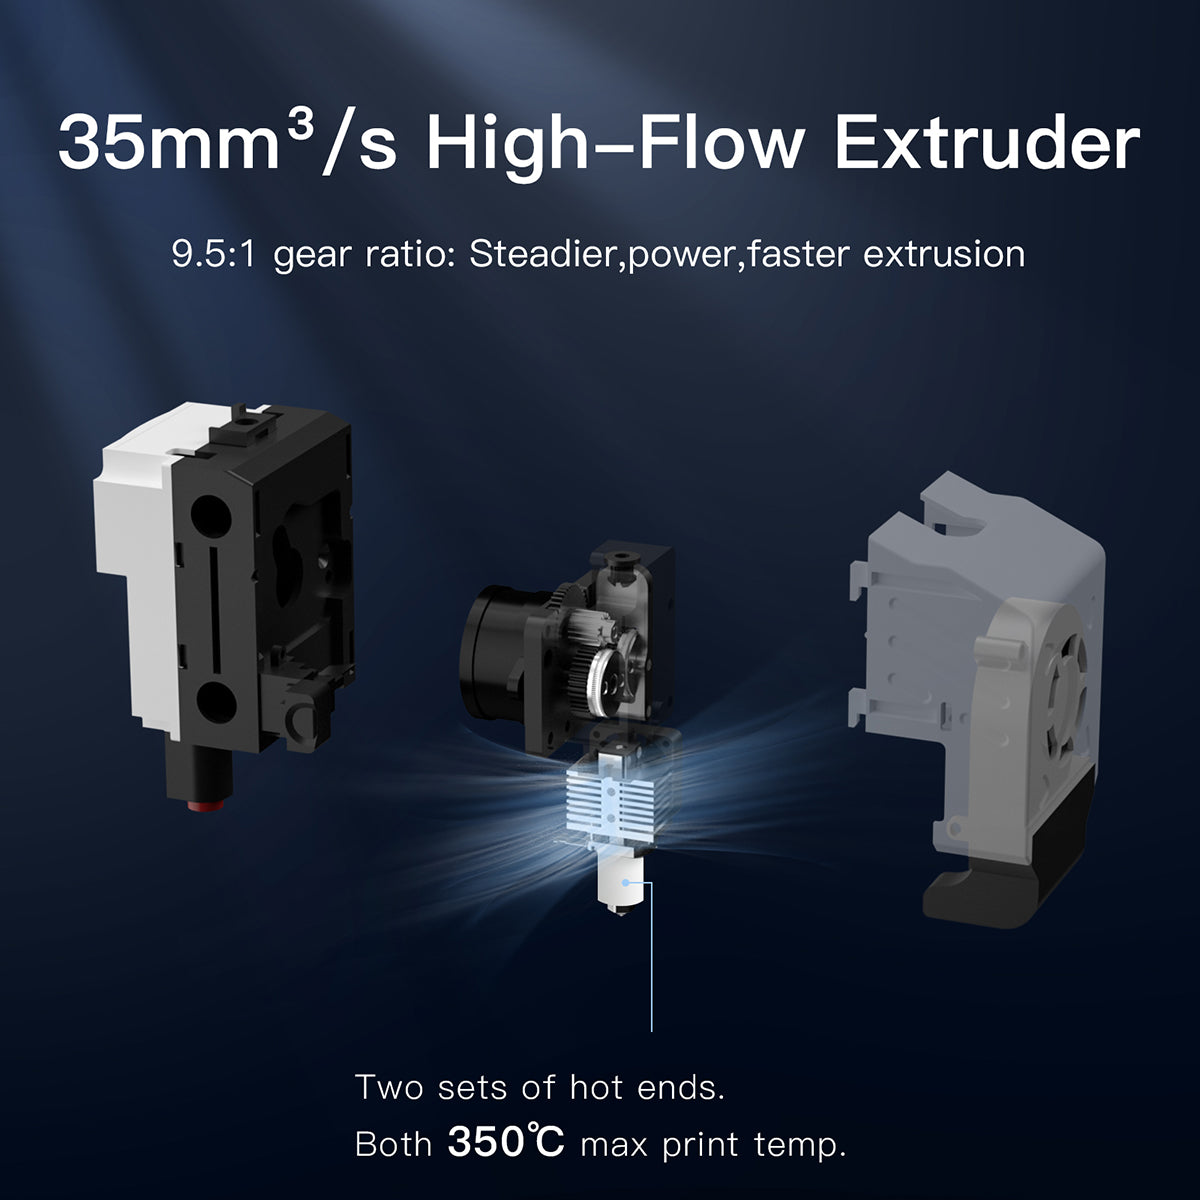 High-flow extruder, 350℃ max print temp